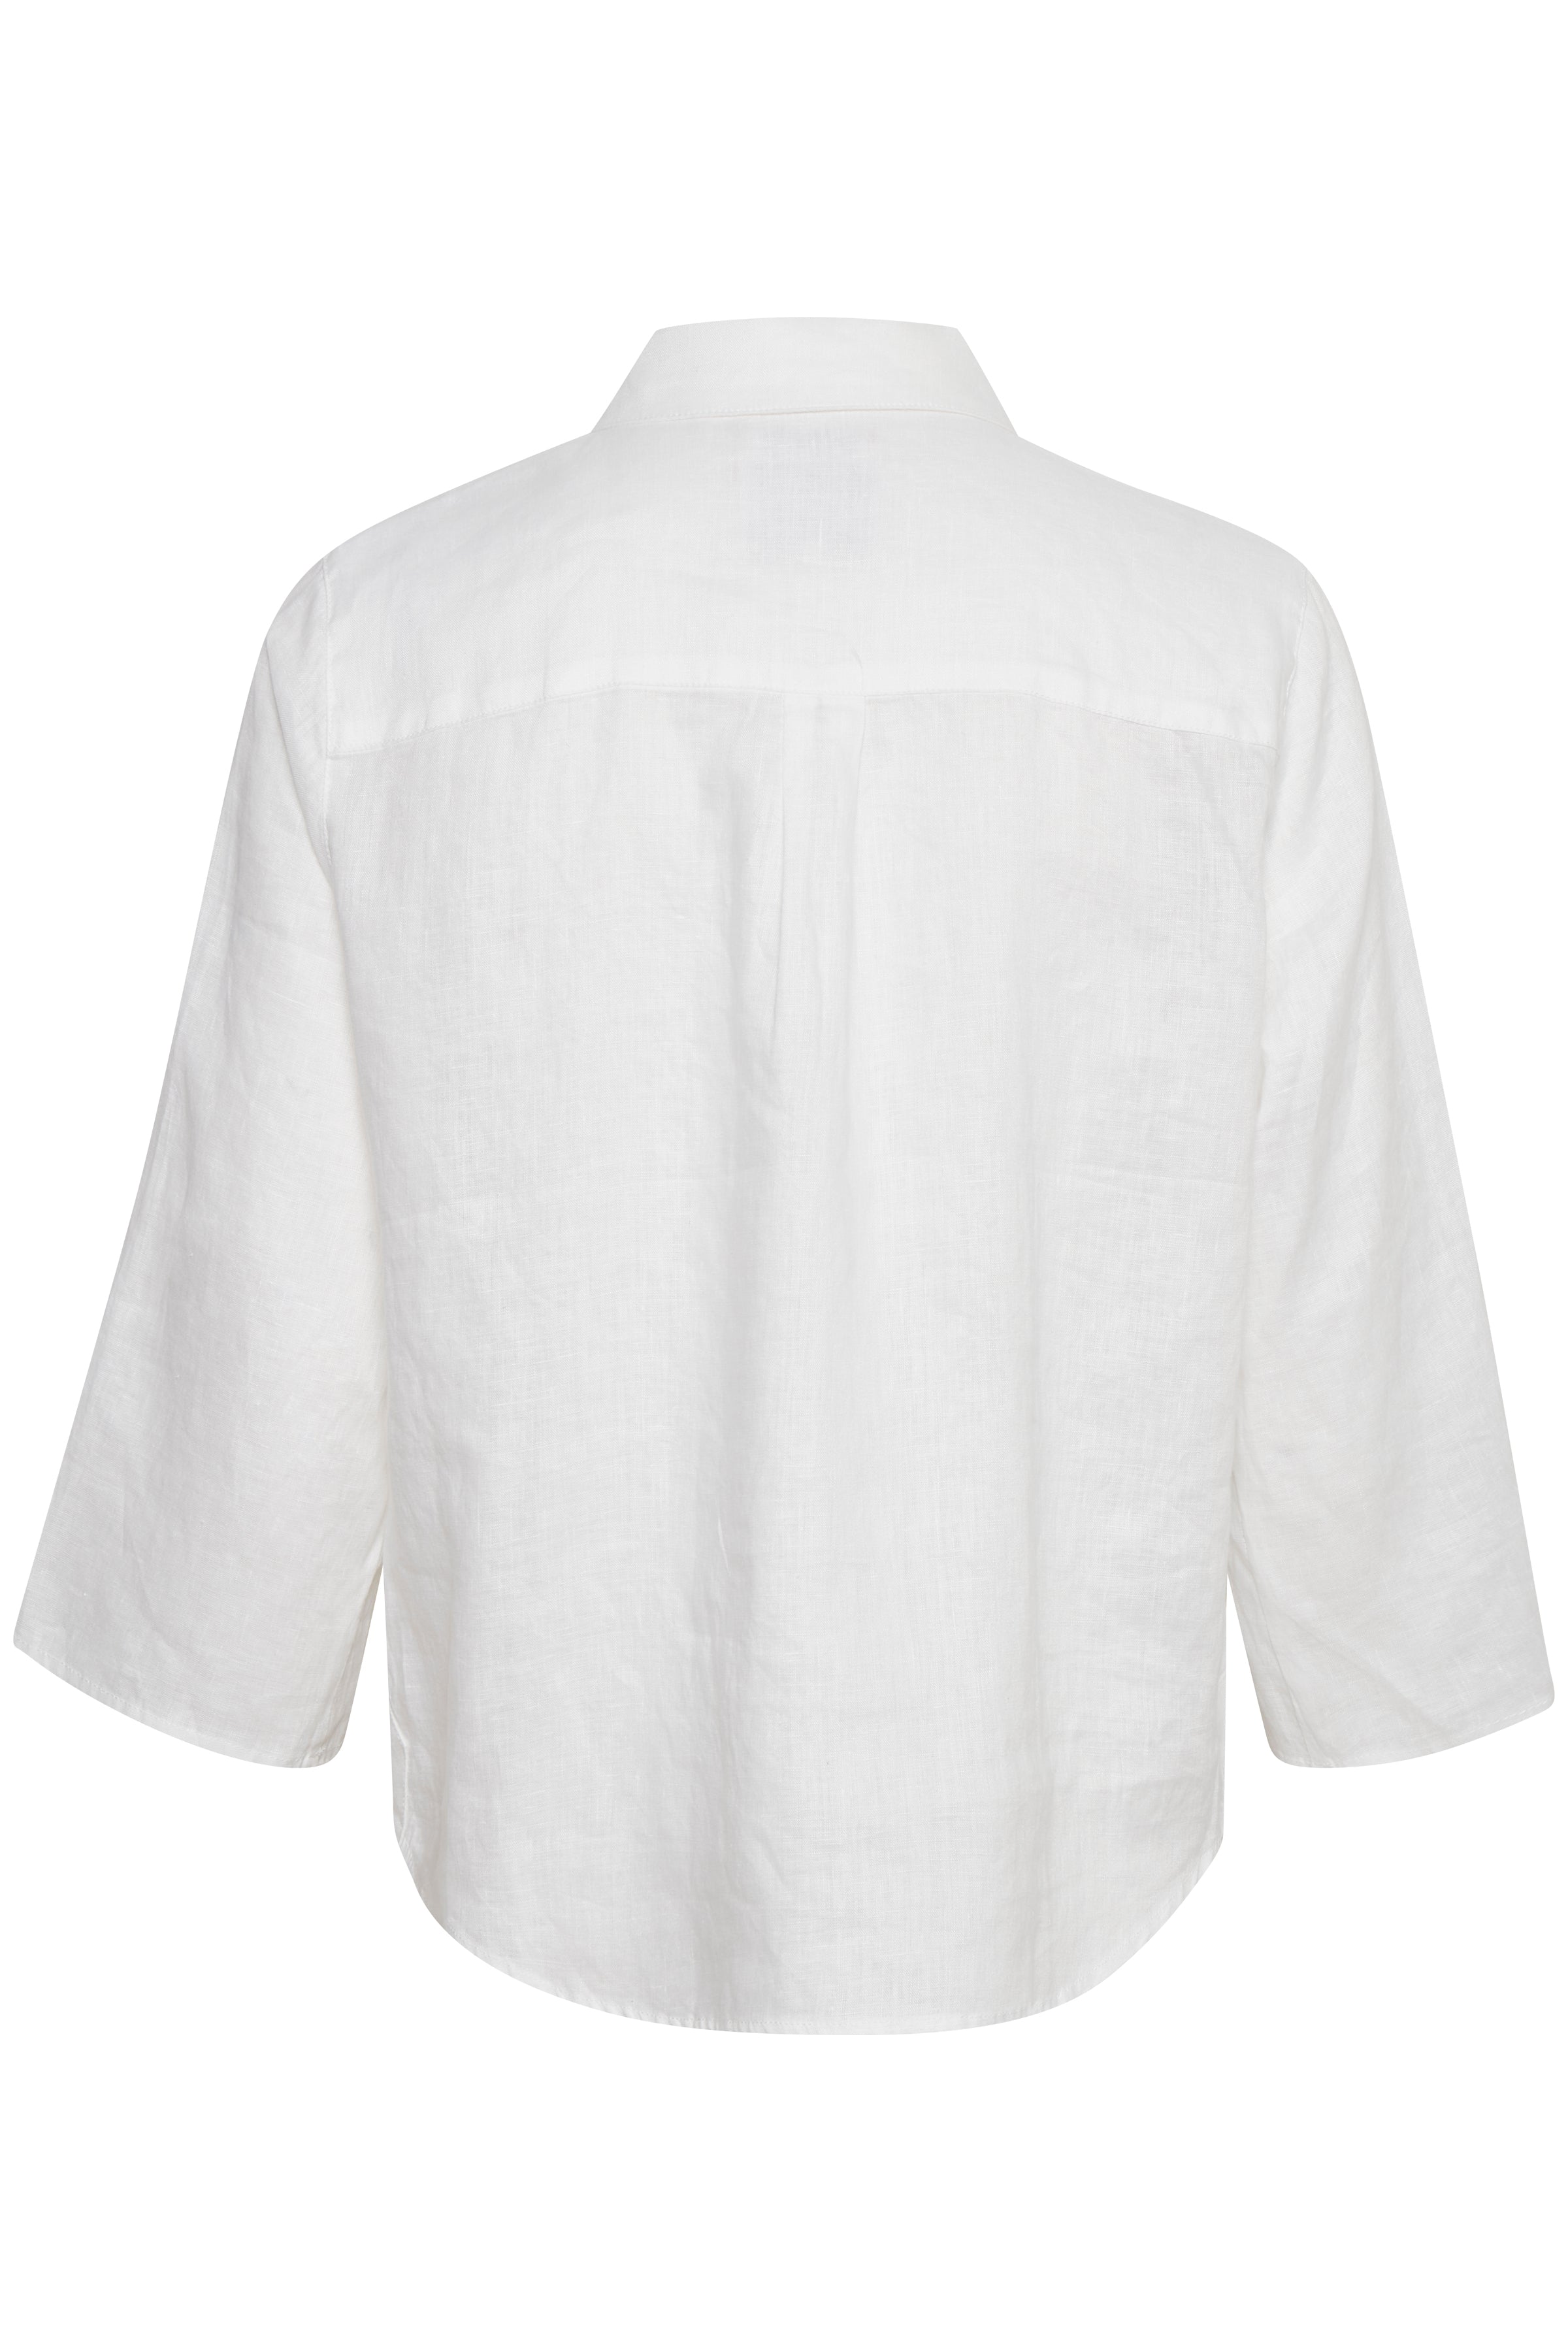 CindiesPW Shirt - Bright White